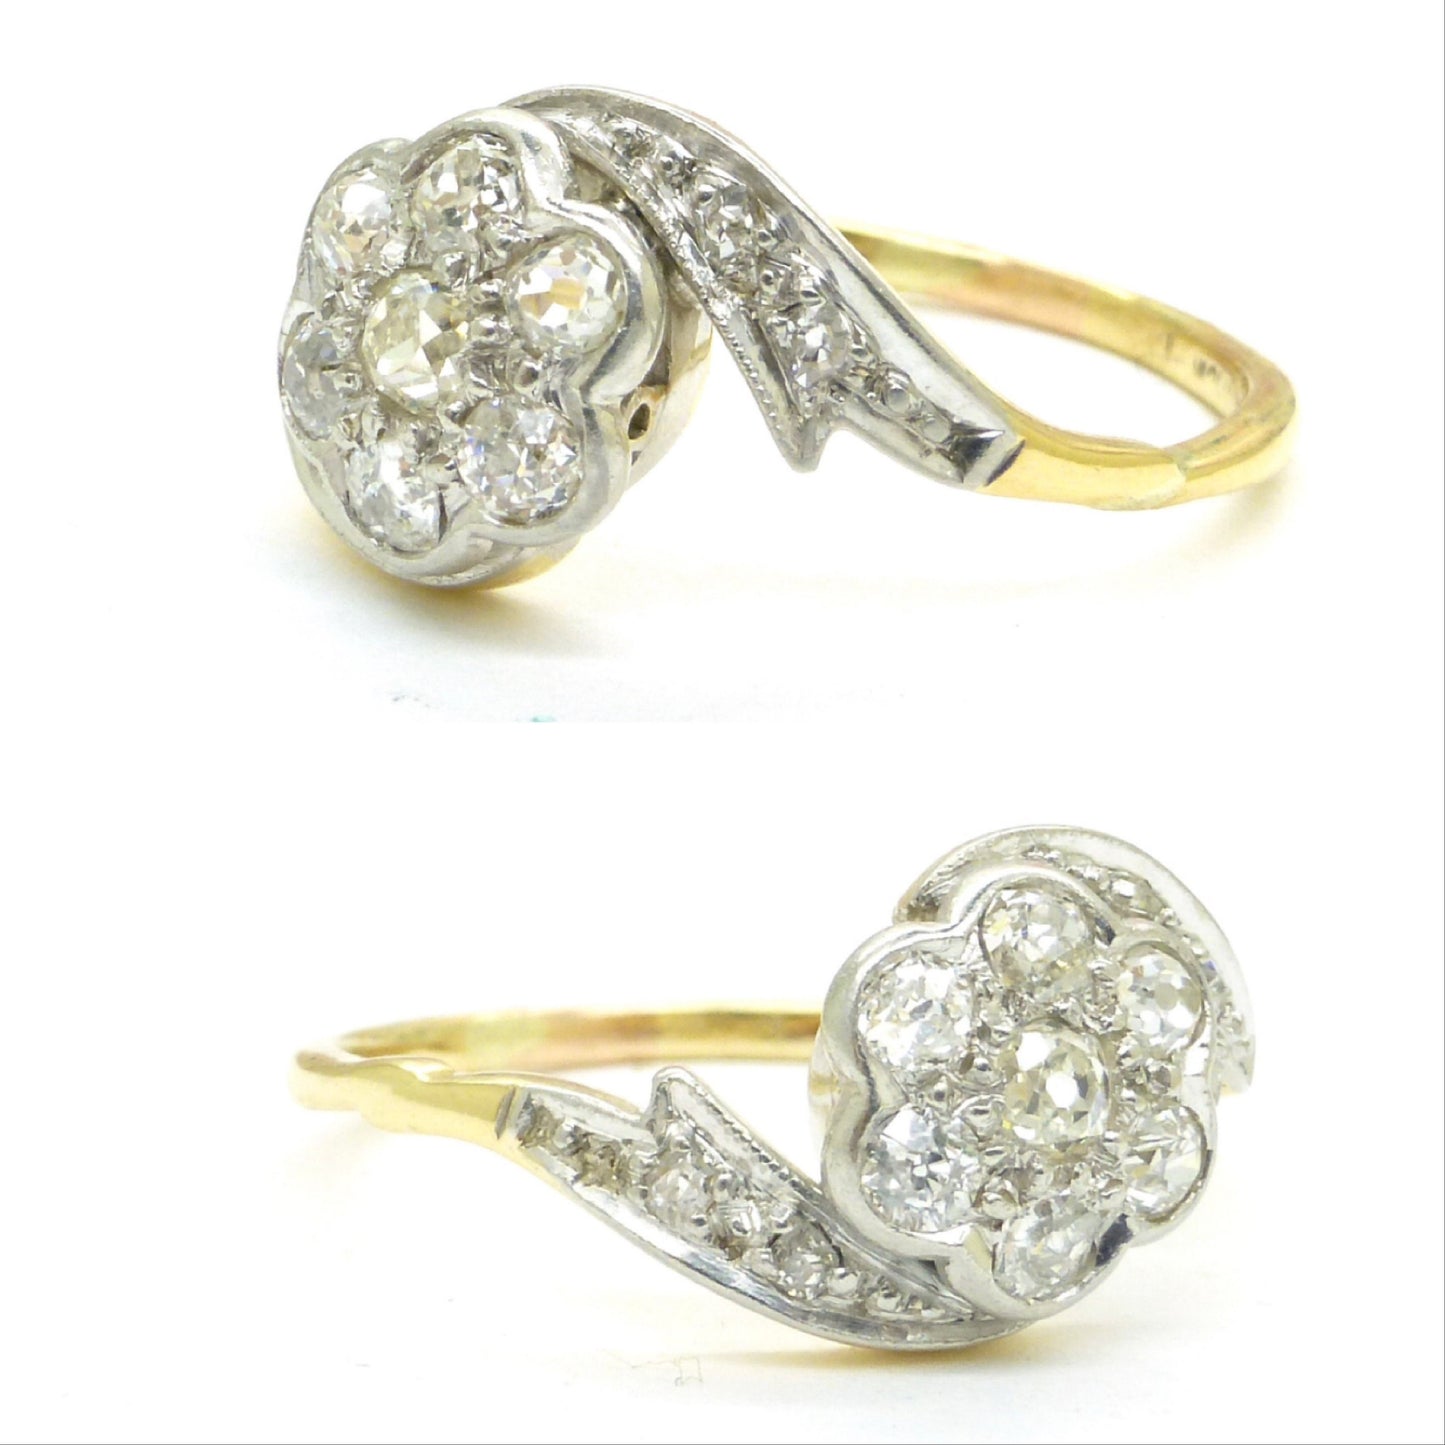 Antique Edwardian 18ct platinum old cut diamond daisy ring c1910-1920's